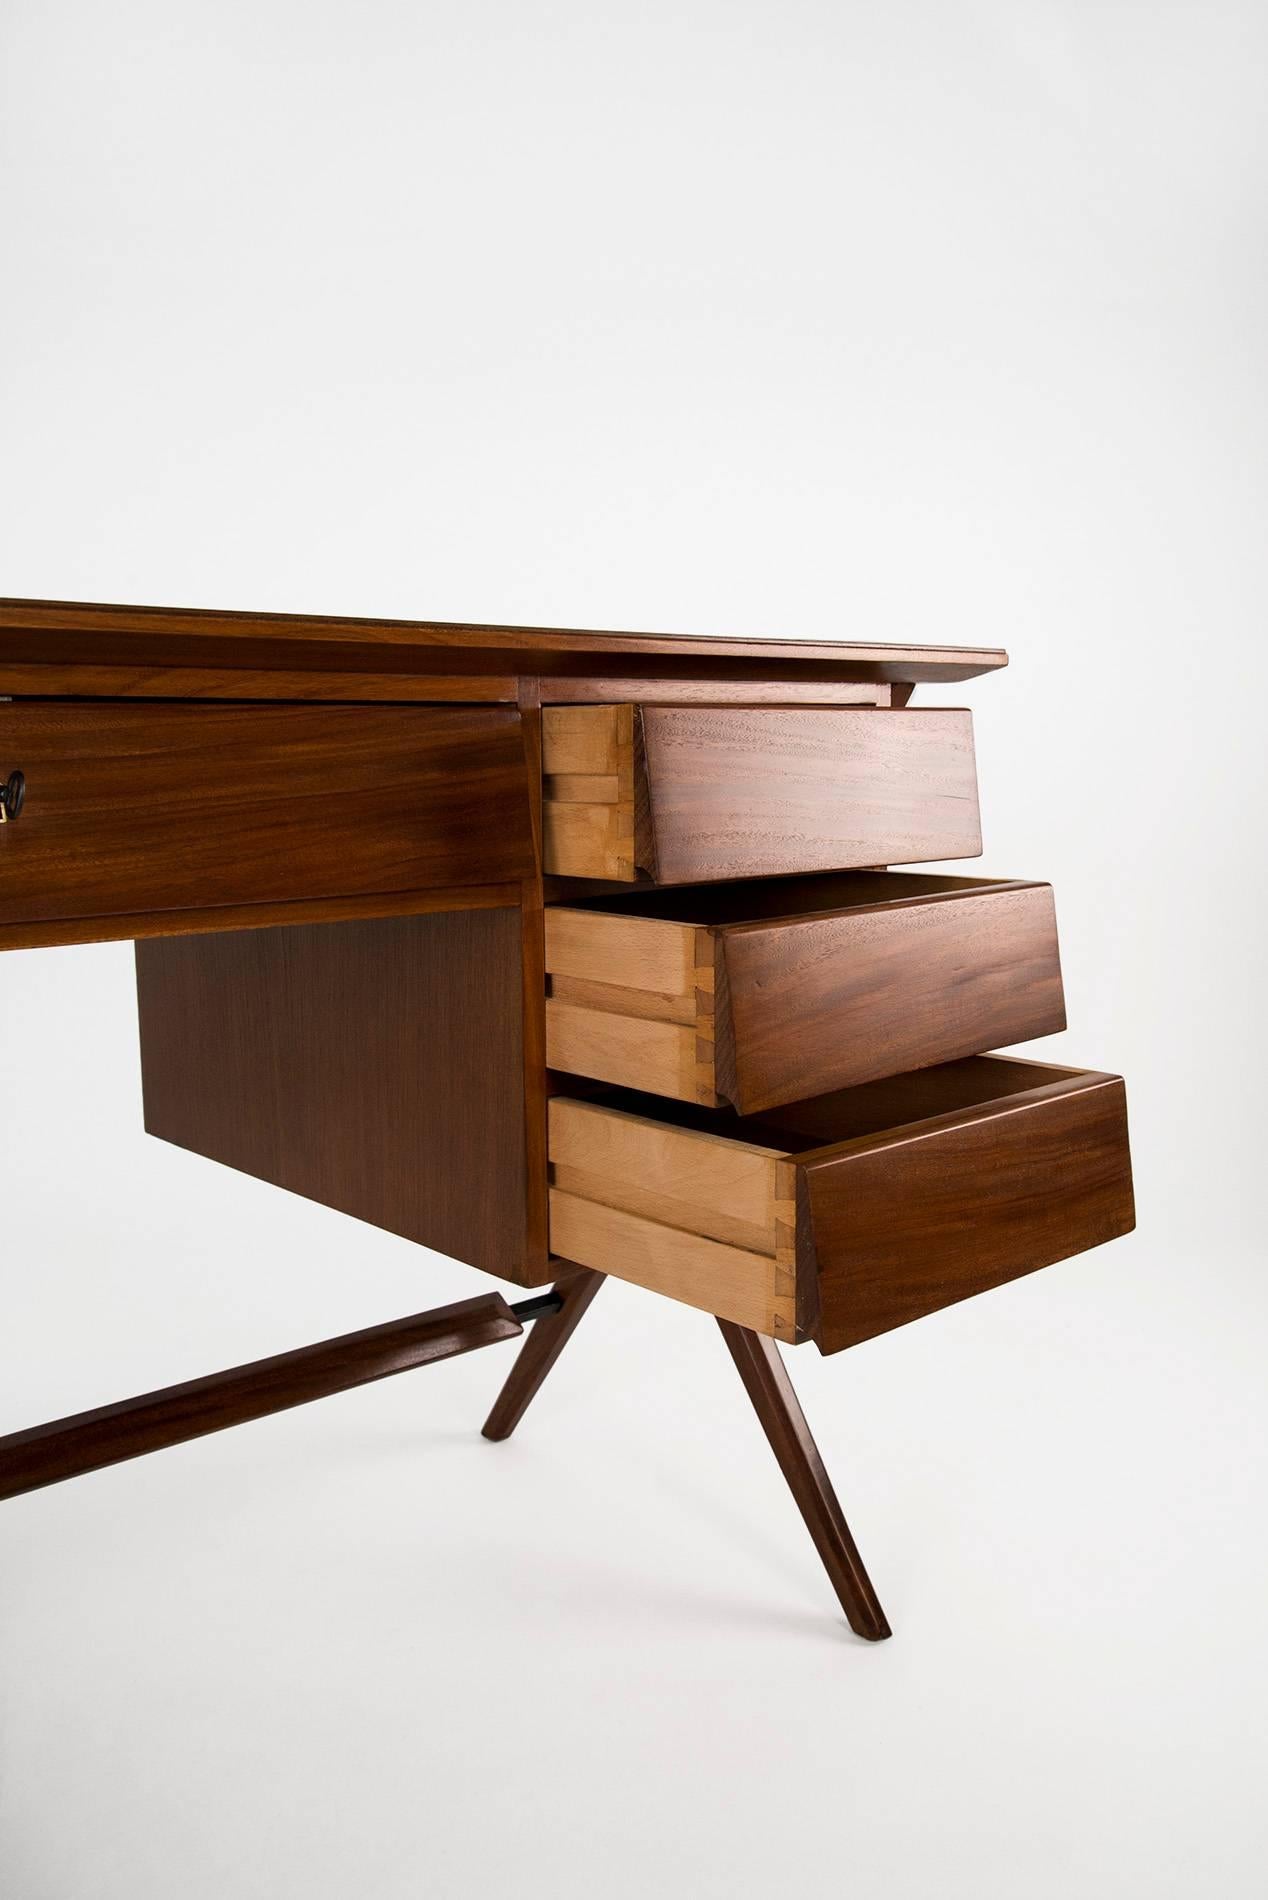 Formica Pair of Impressive Mahogany Desks, Italy, 1950s